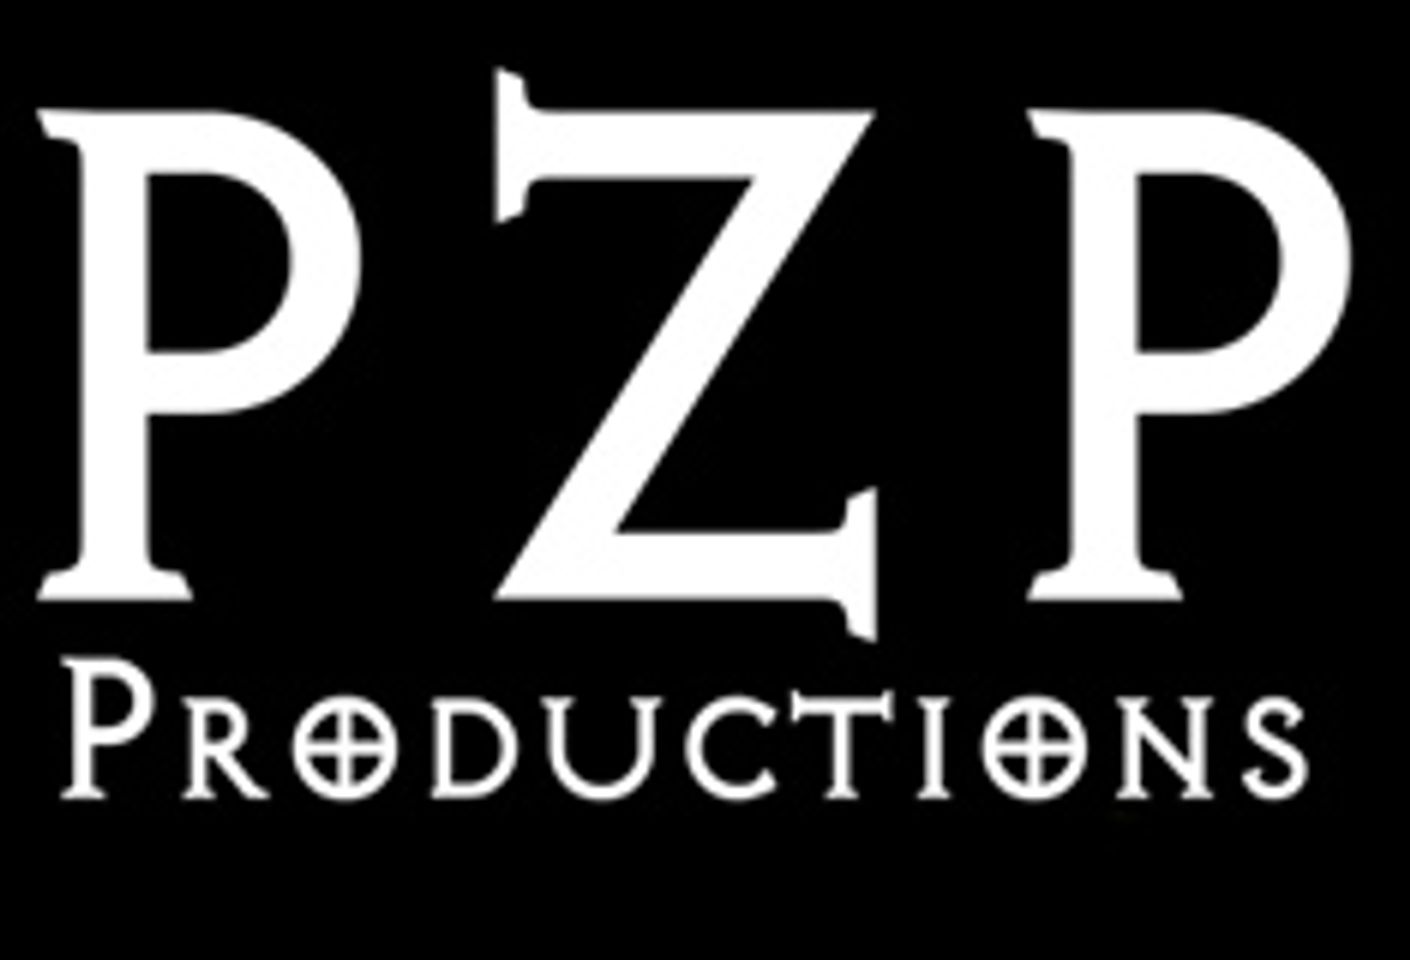 PZP Puts Production on Hiatus